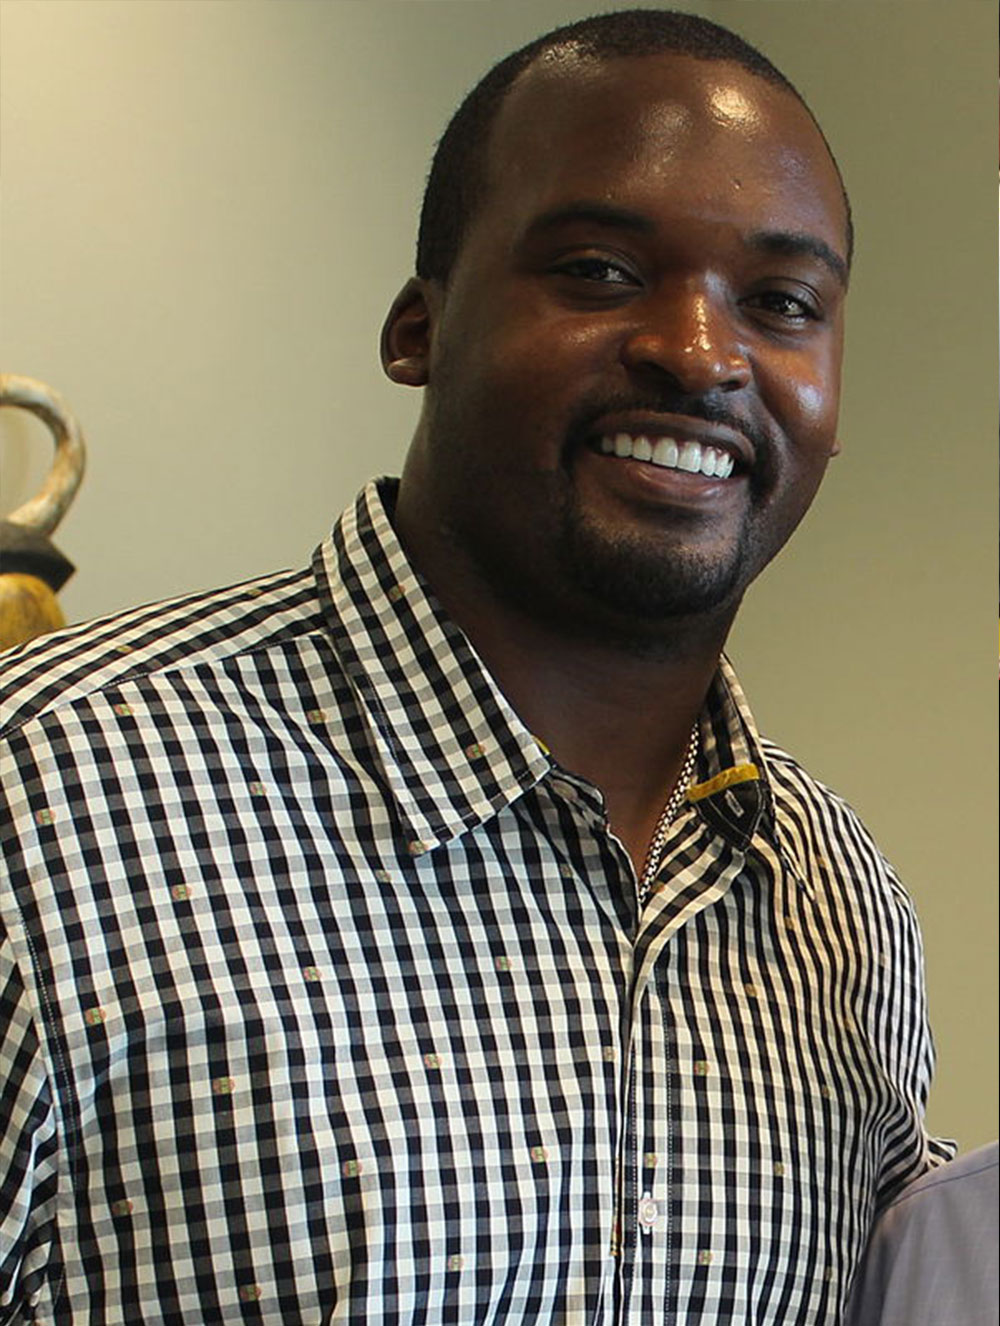 Mathias Kiwanuka in a plaid shirt